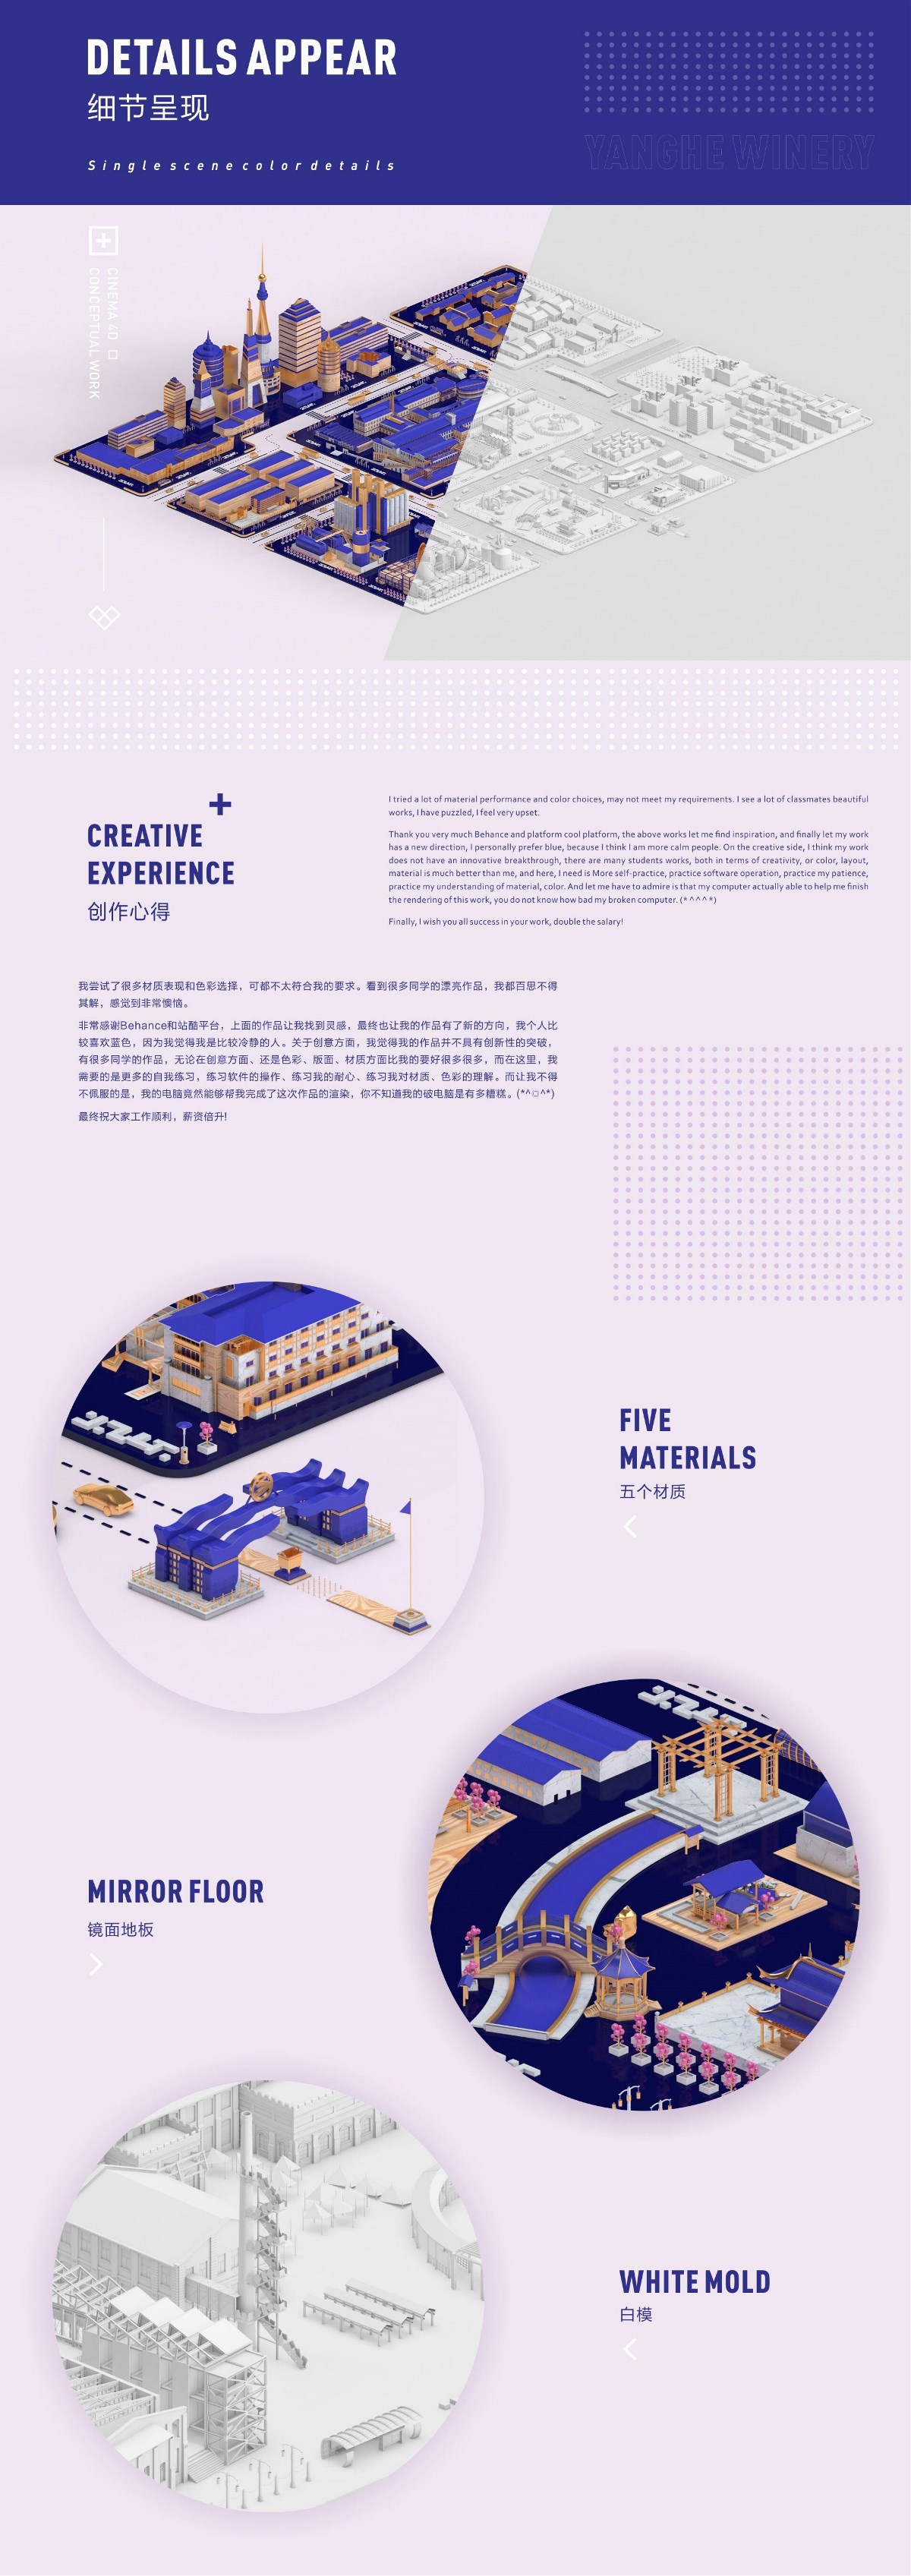 Yanghe winery 3DScene creative 洋河酒厂3D场景创意